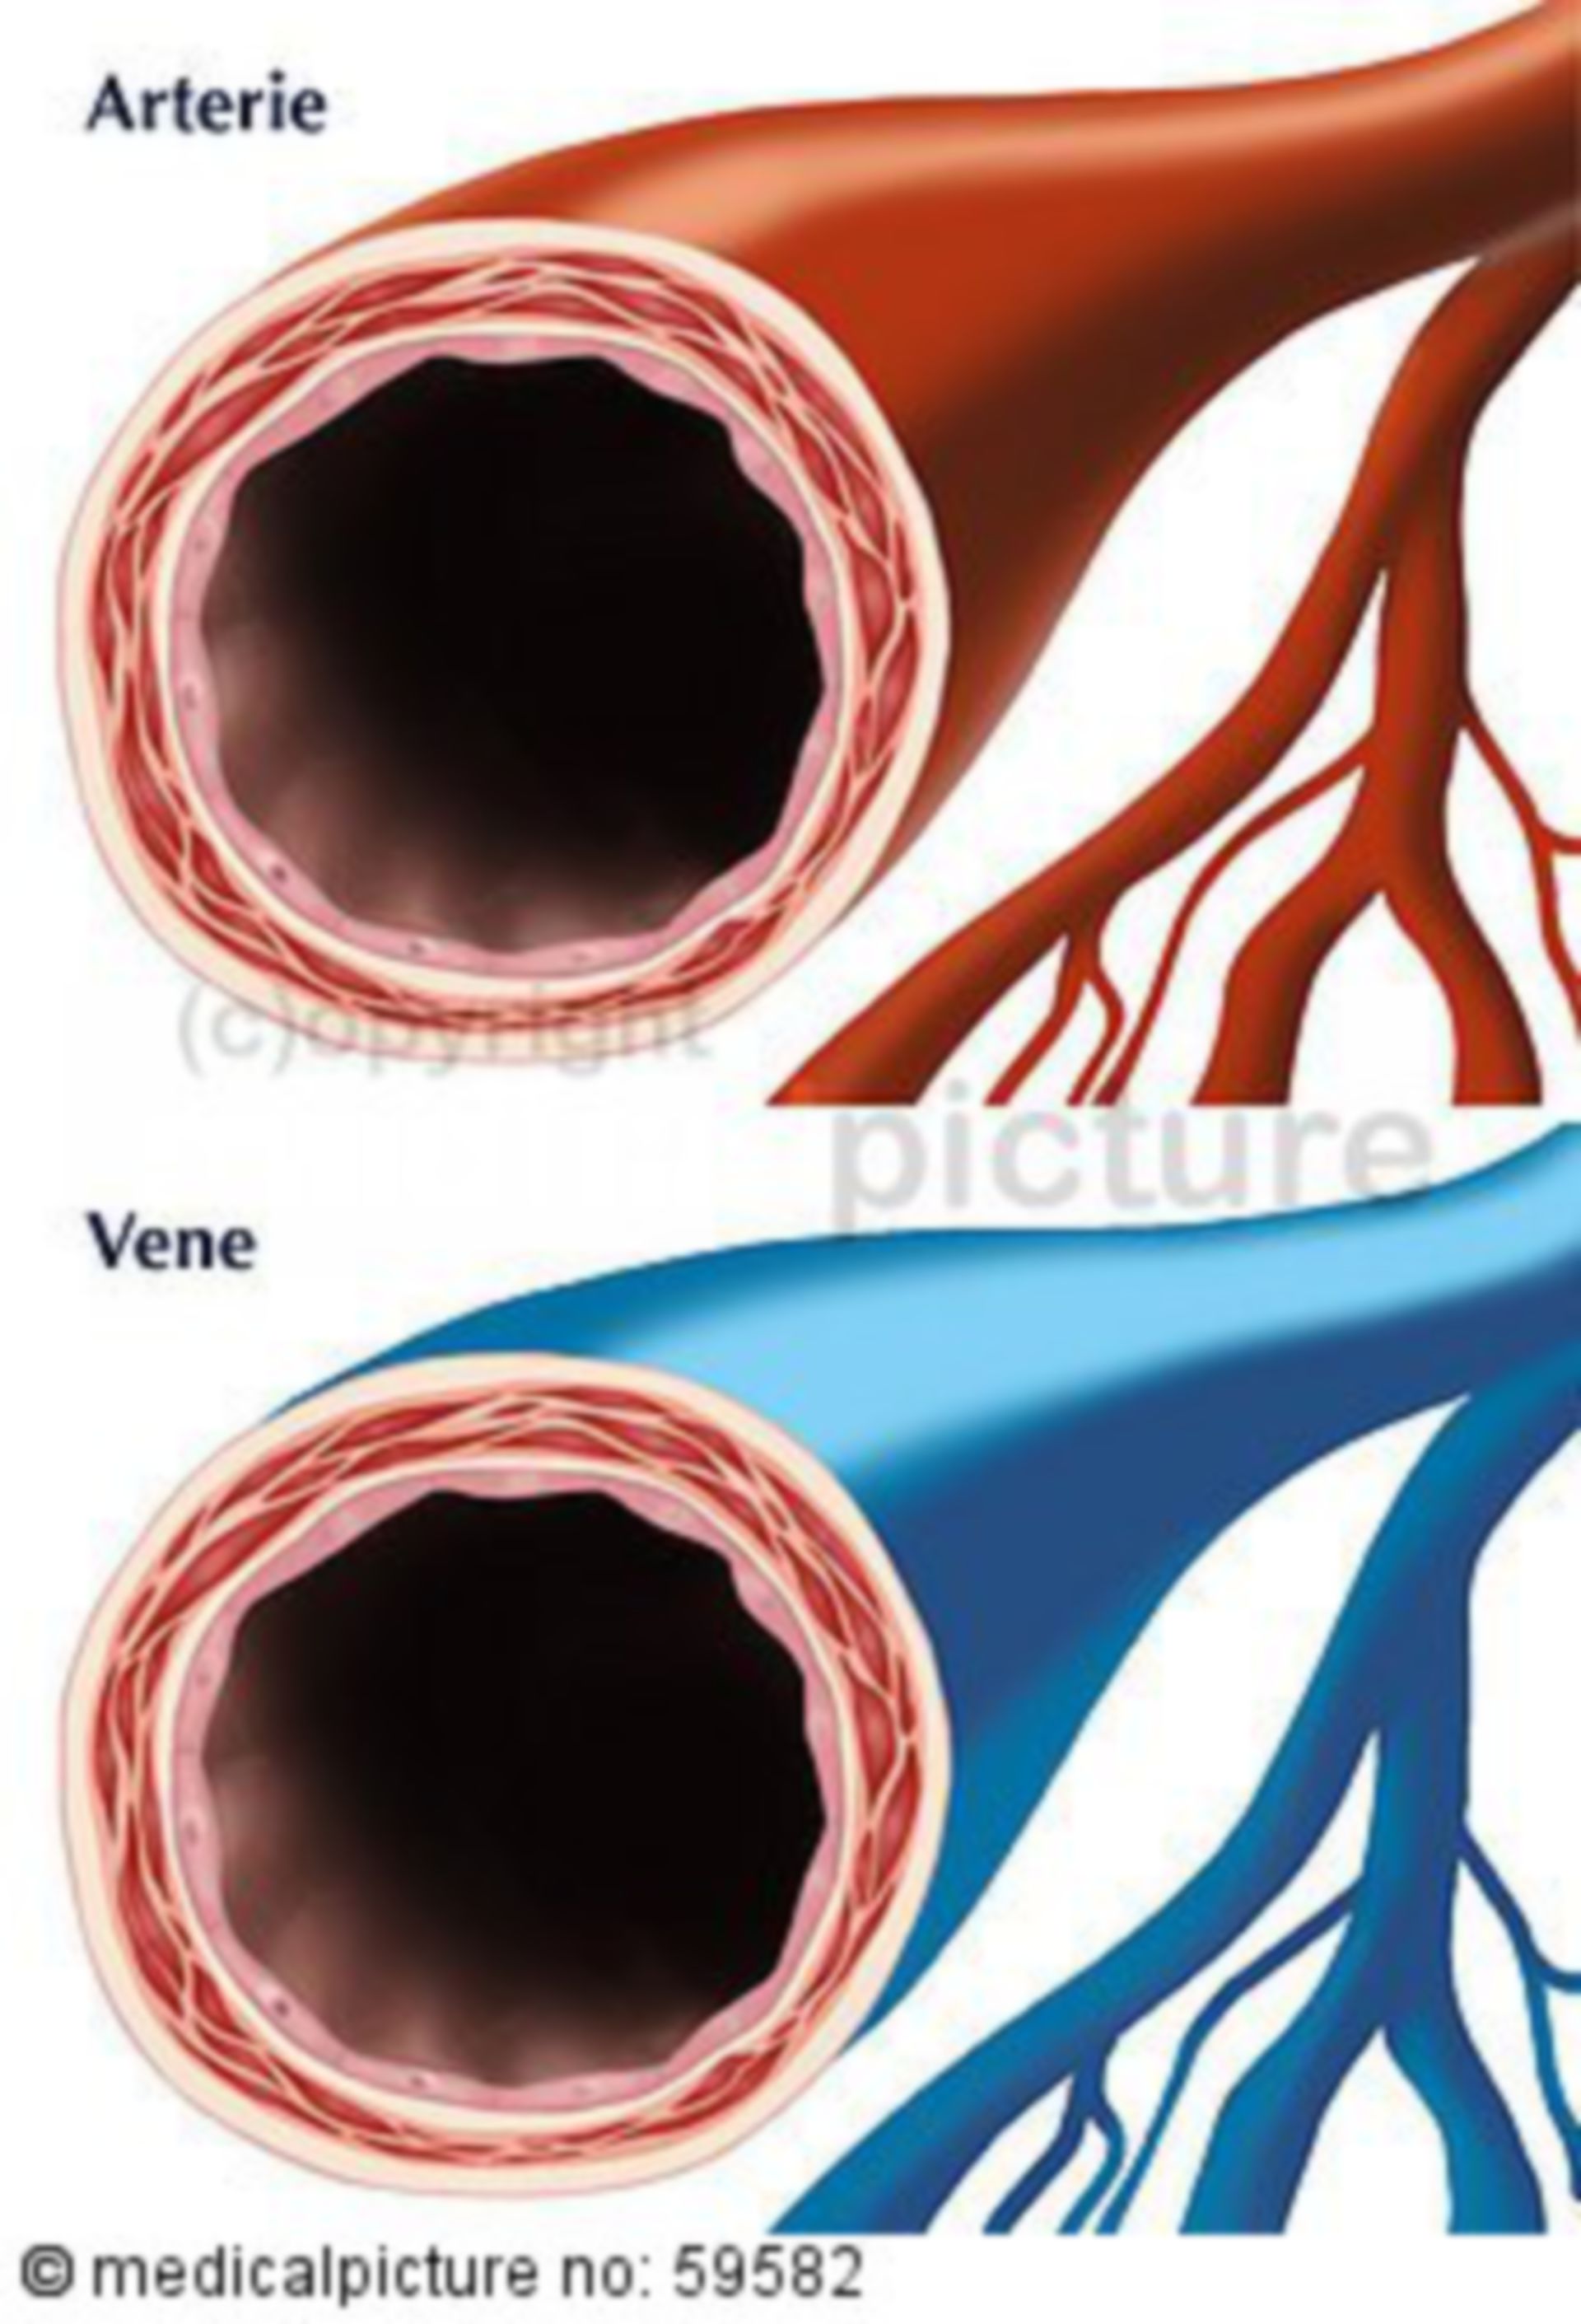 Artery and Vein